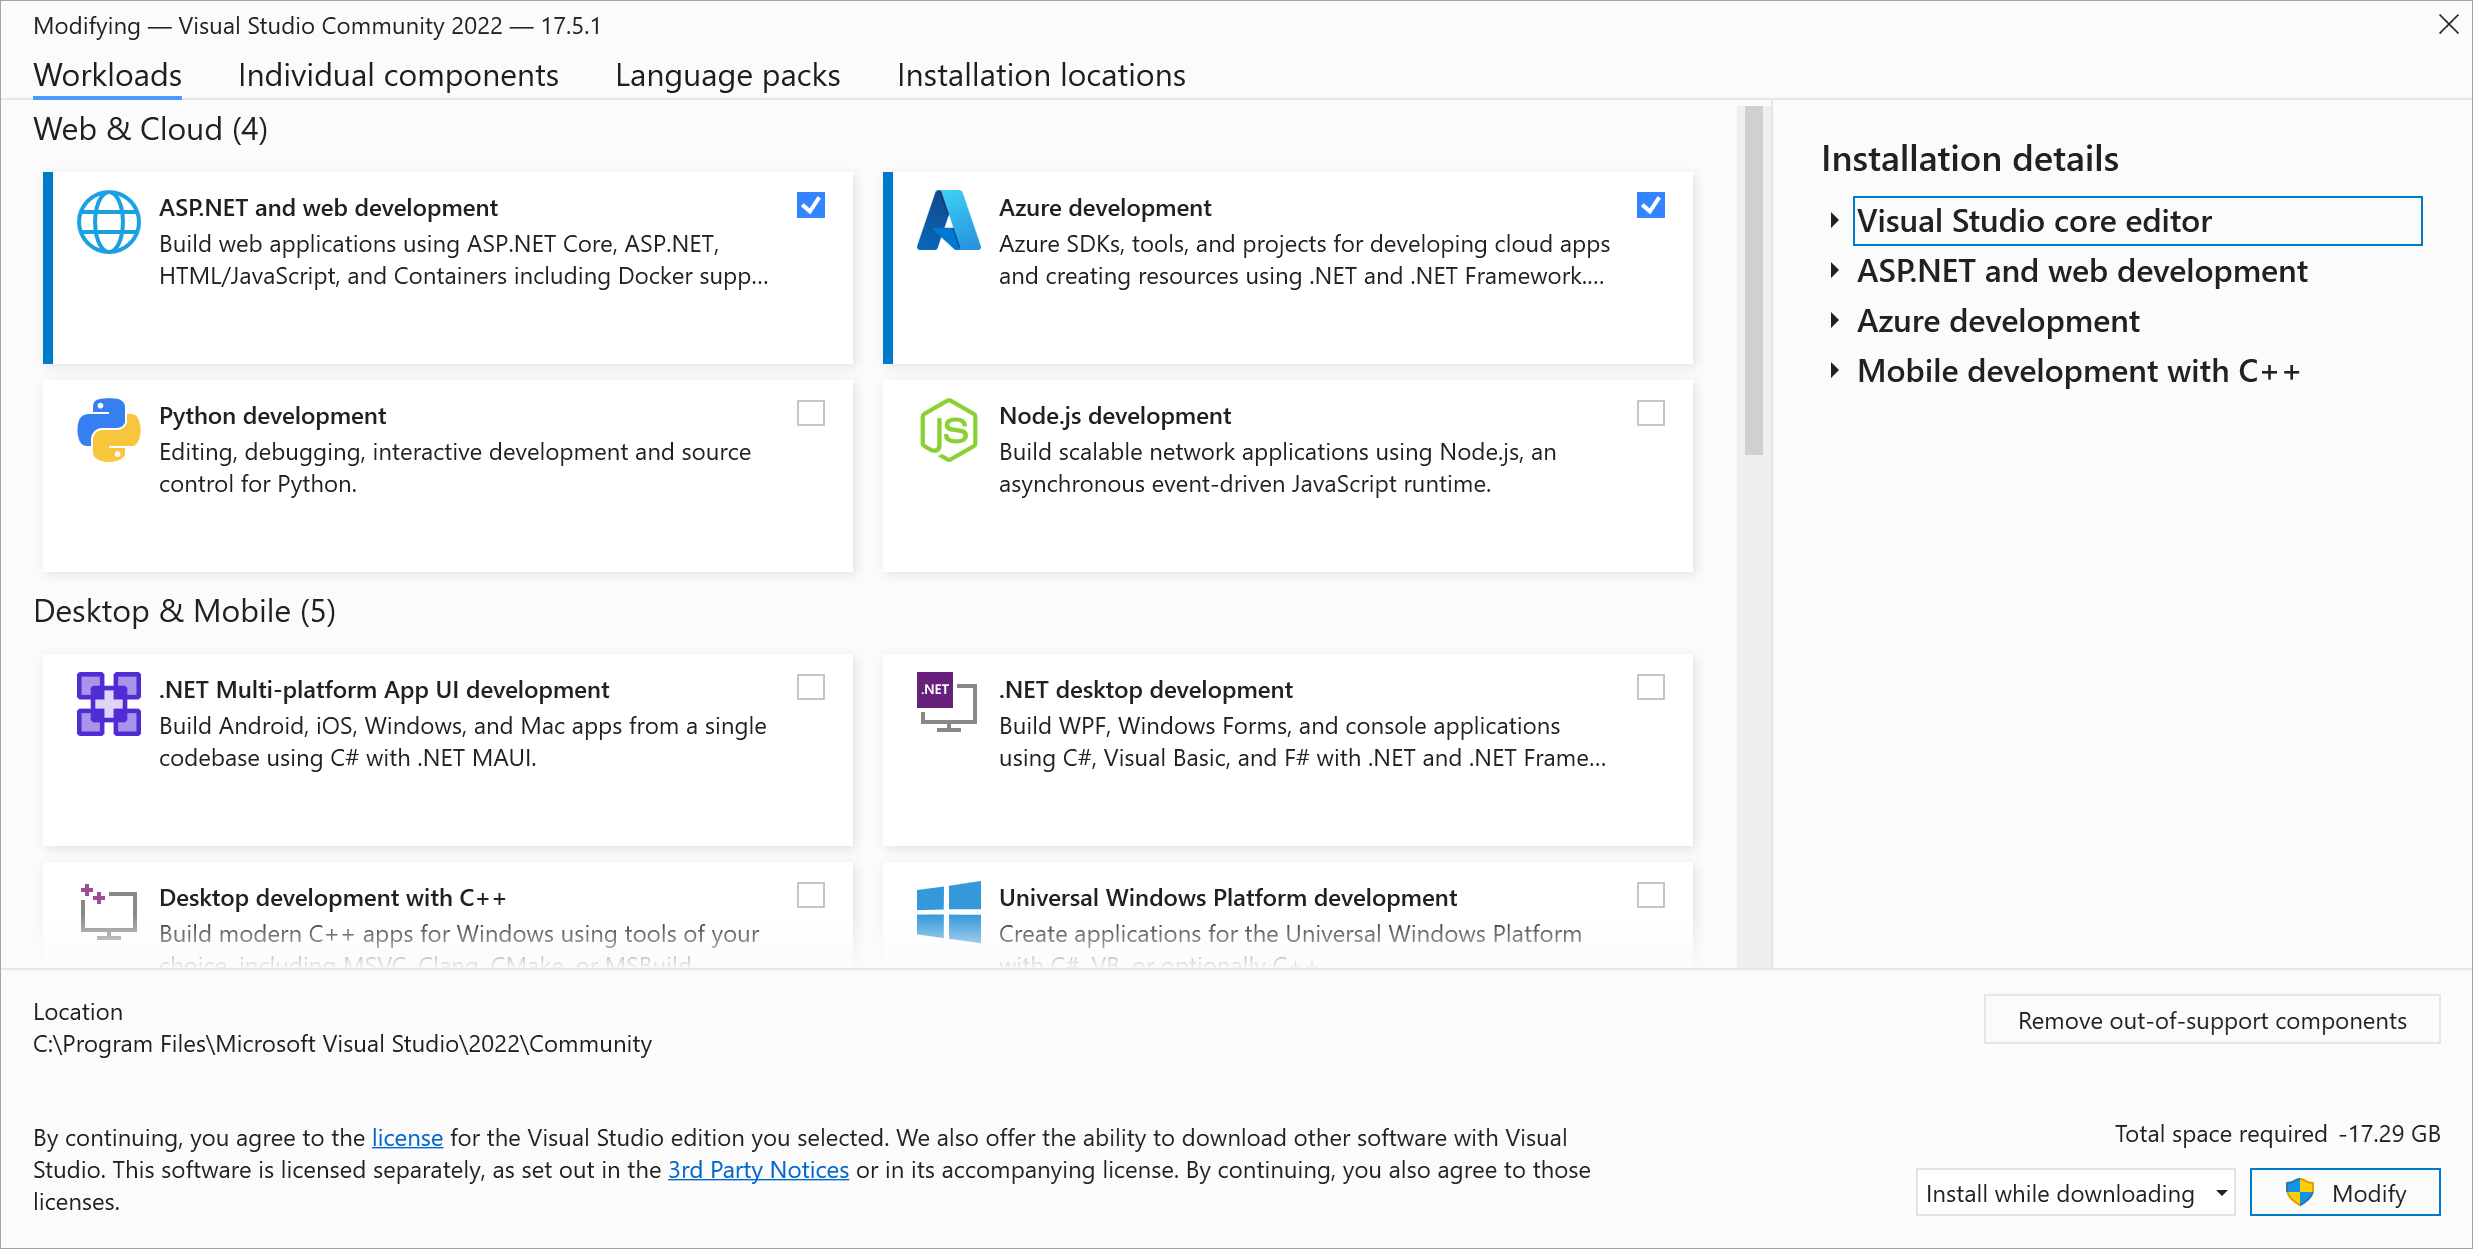 Screenshot of Modifying Visual Studio Community 2022 workloads tab with ASP.NET and web development and Azure development highlighted.